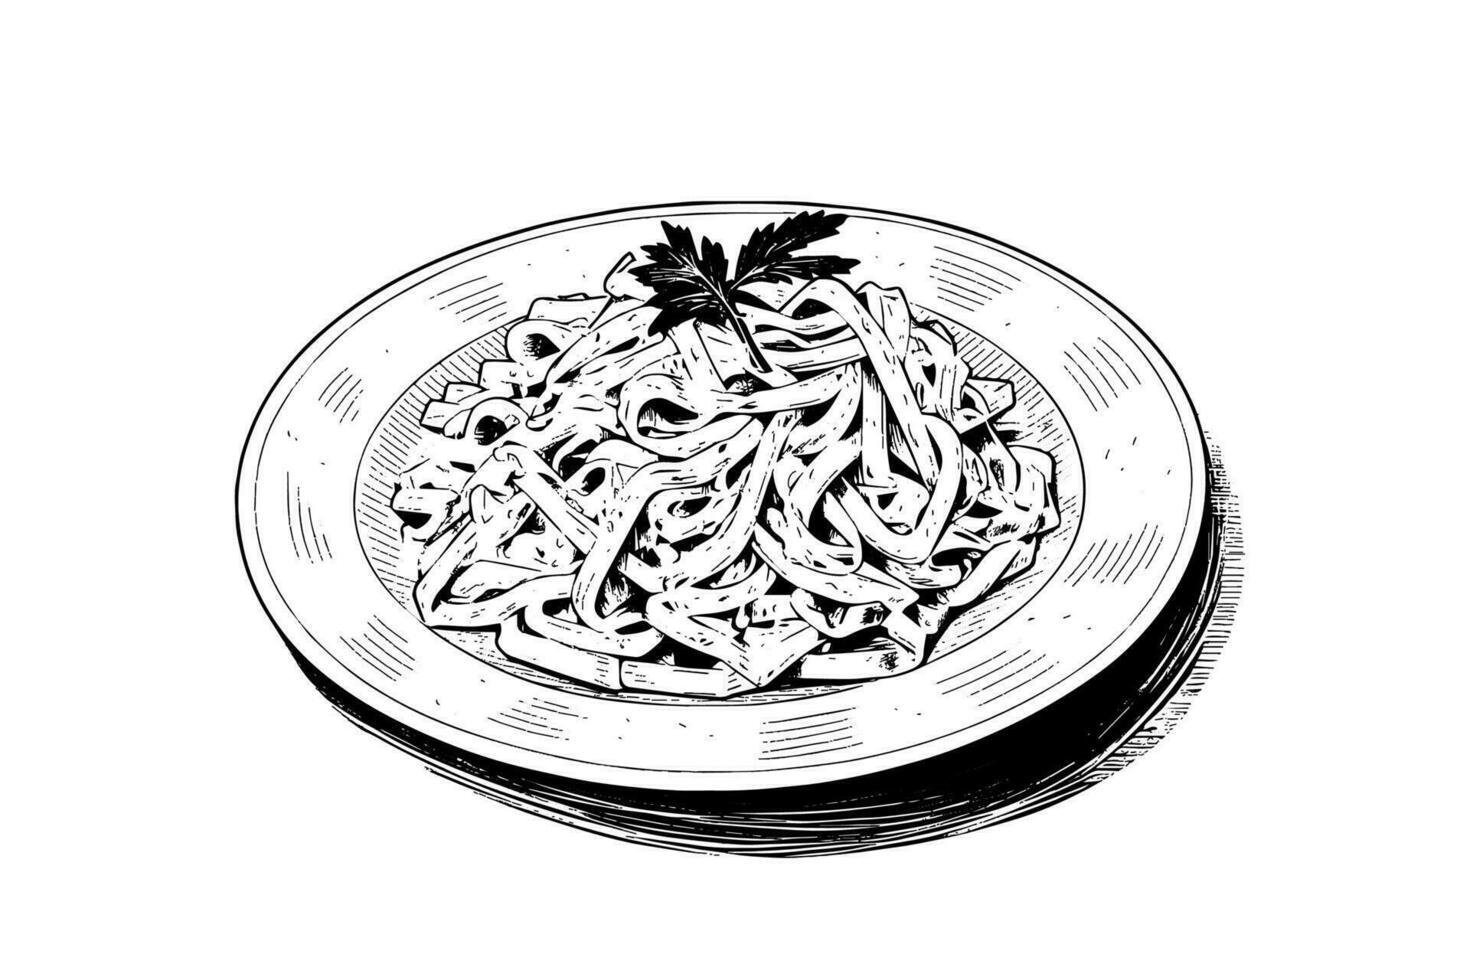 italien Pâtes. spaghetti sur une plaque, fourchette avec spaghetti vecteur gravure style illustration.